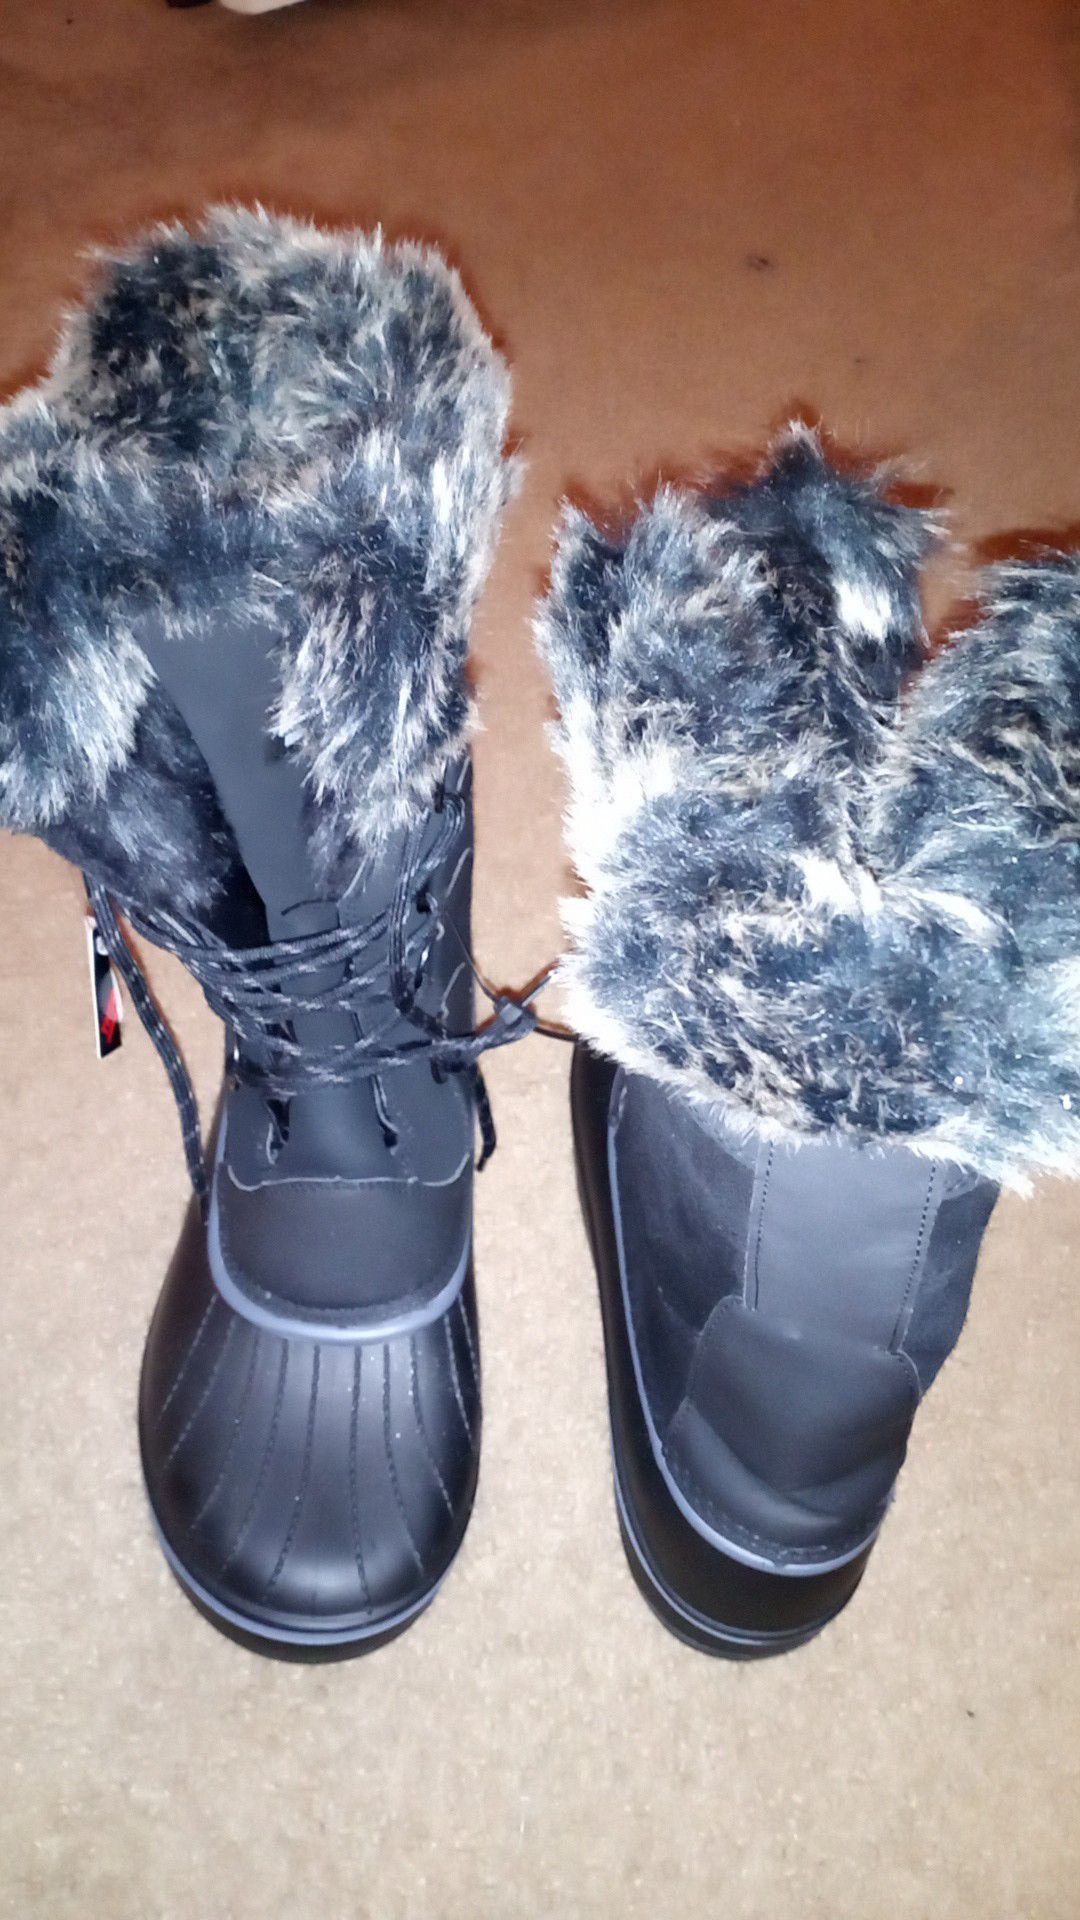 Brand New Snow Boots